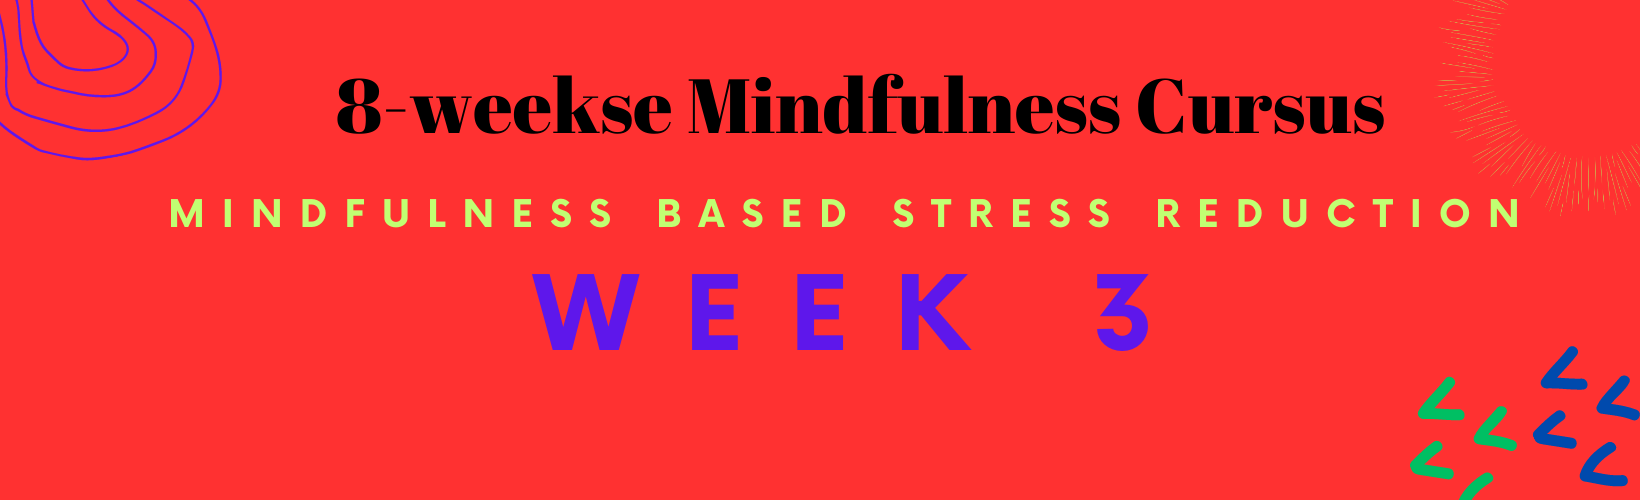 header mindfulness week 3